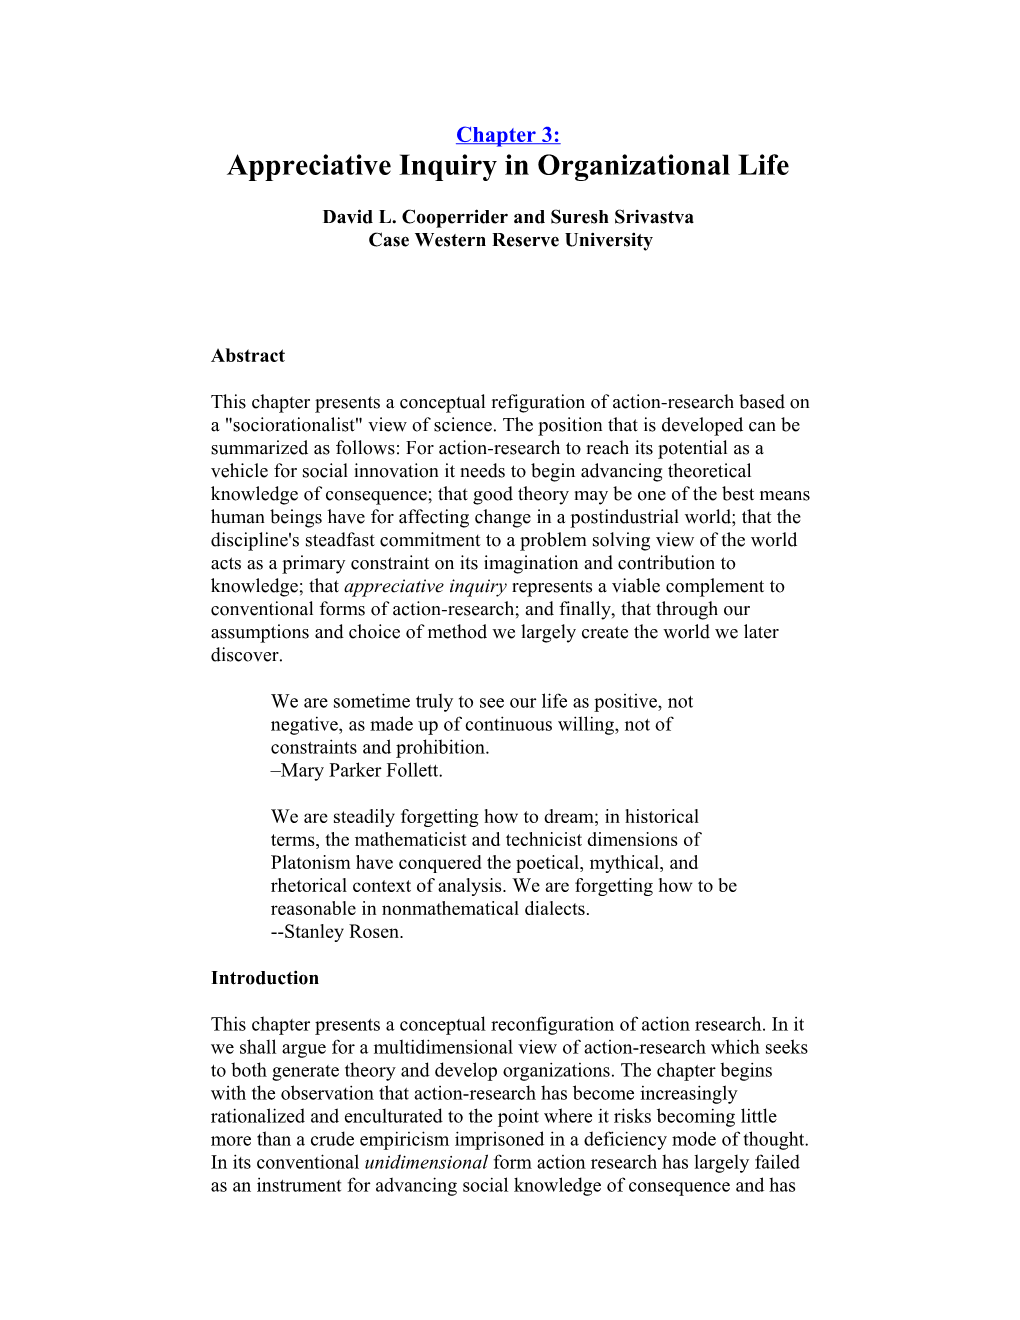 Chapter 3: Appreciative Inquiry in Organizational Life